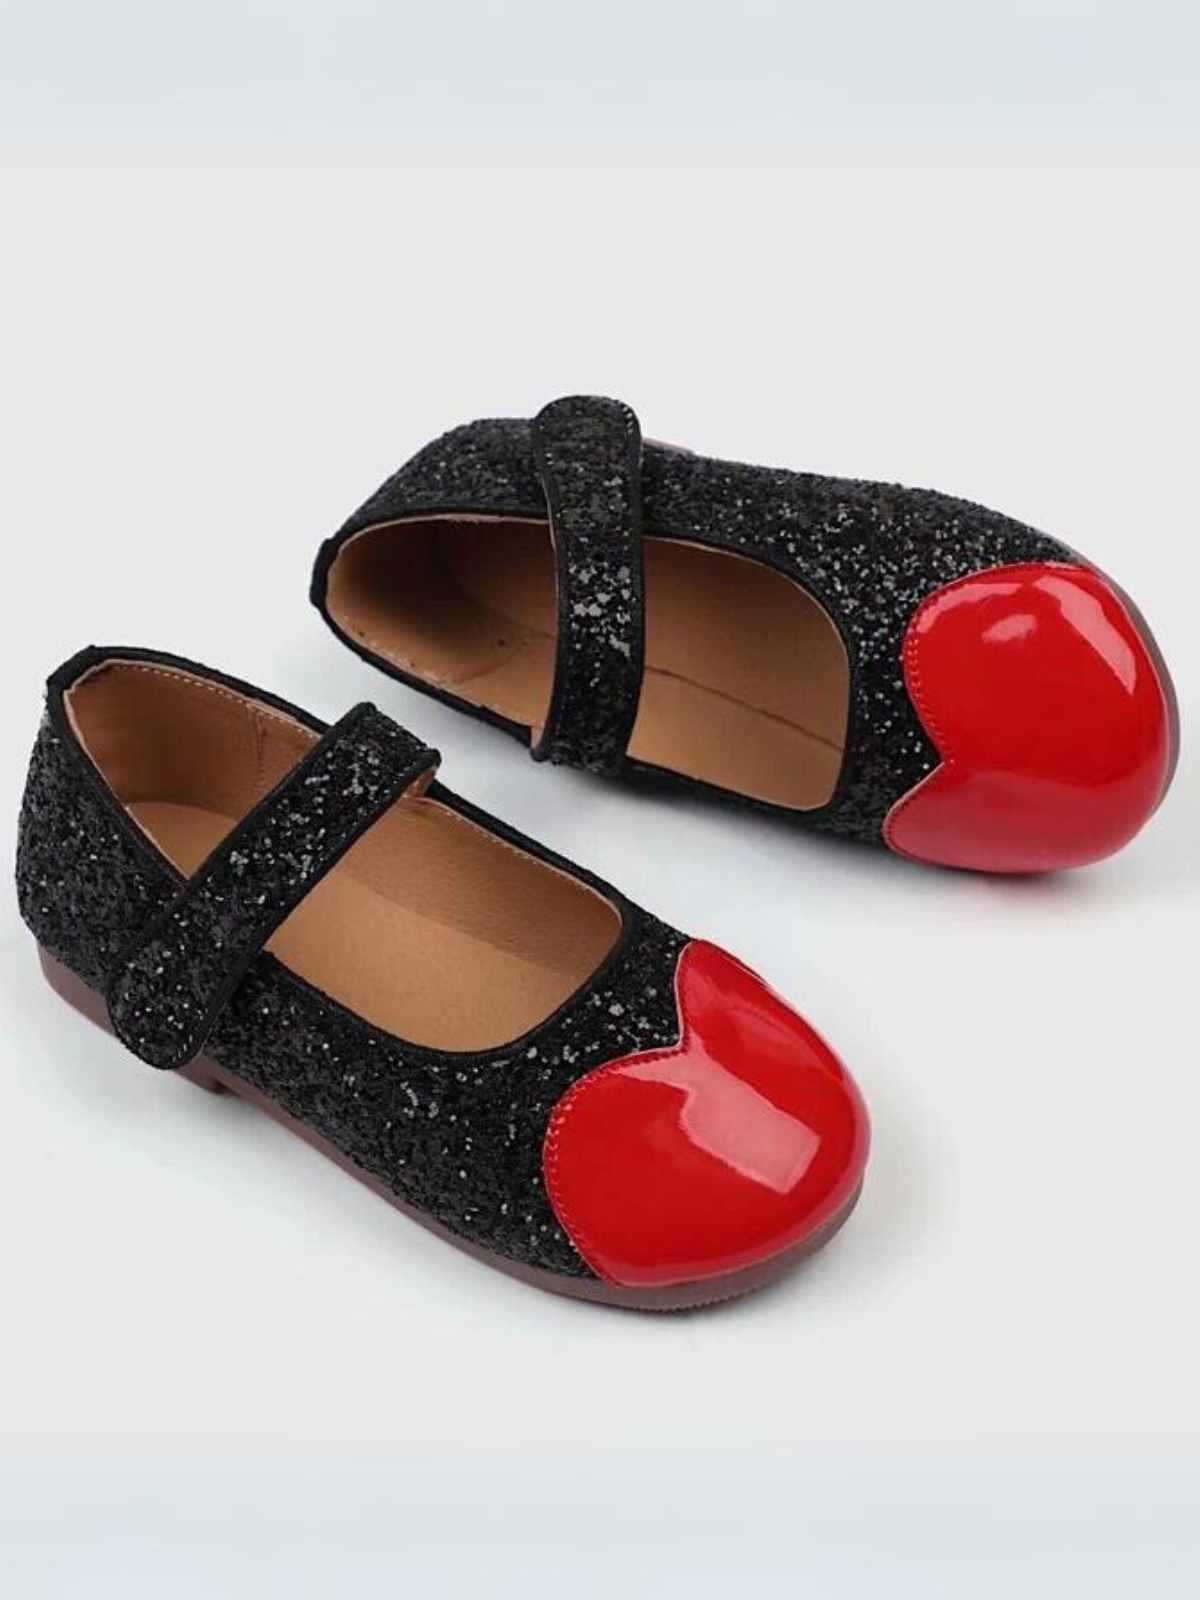 Mia Belle Girls Heart Toe-Cap Mary Janes | Shoes By Liv & Mia